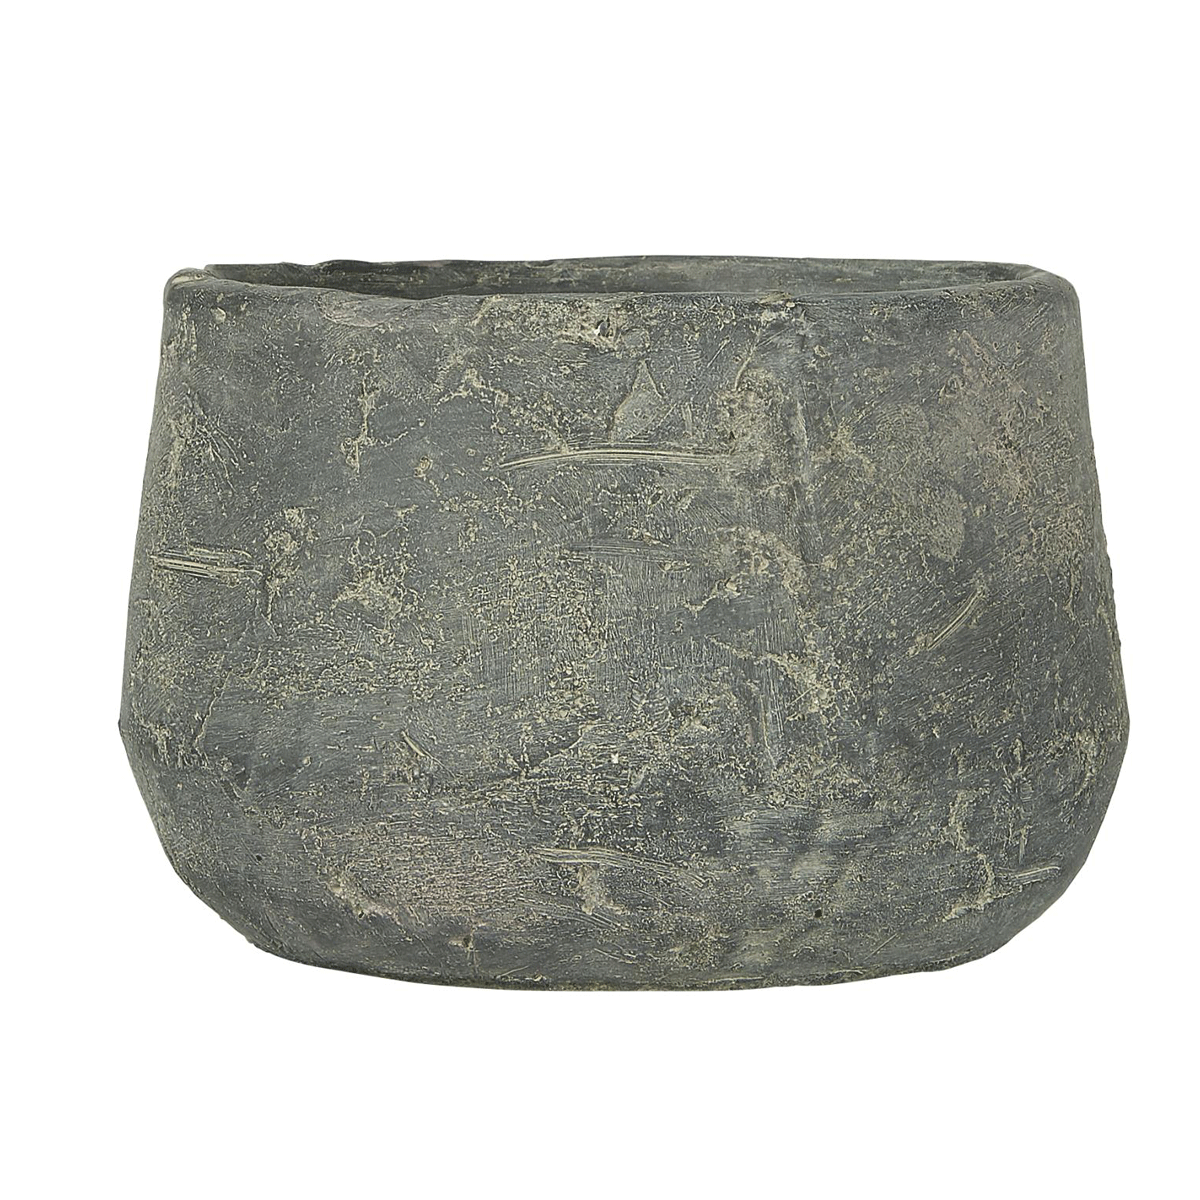 IB Laursen cement Pot Akropolis 15.5cm diameter herbs 13115-18